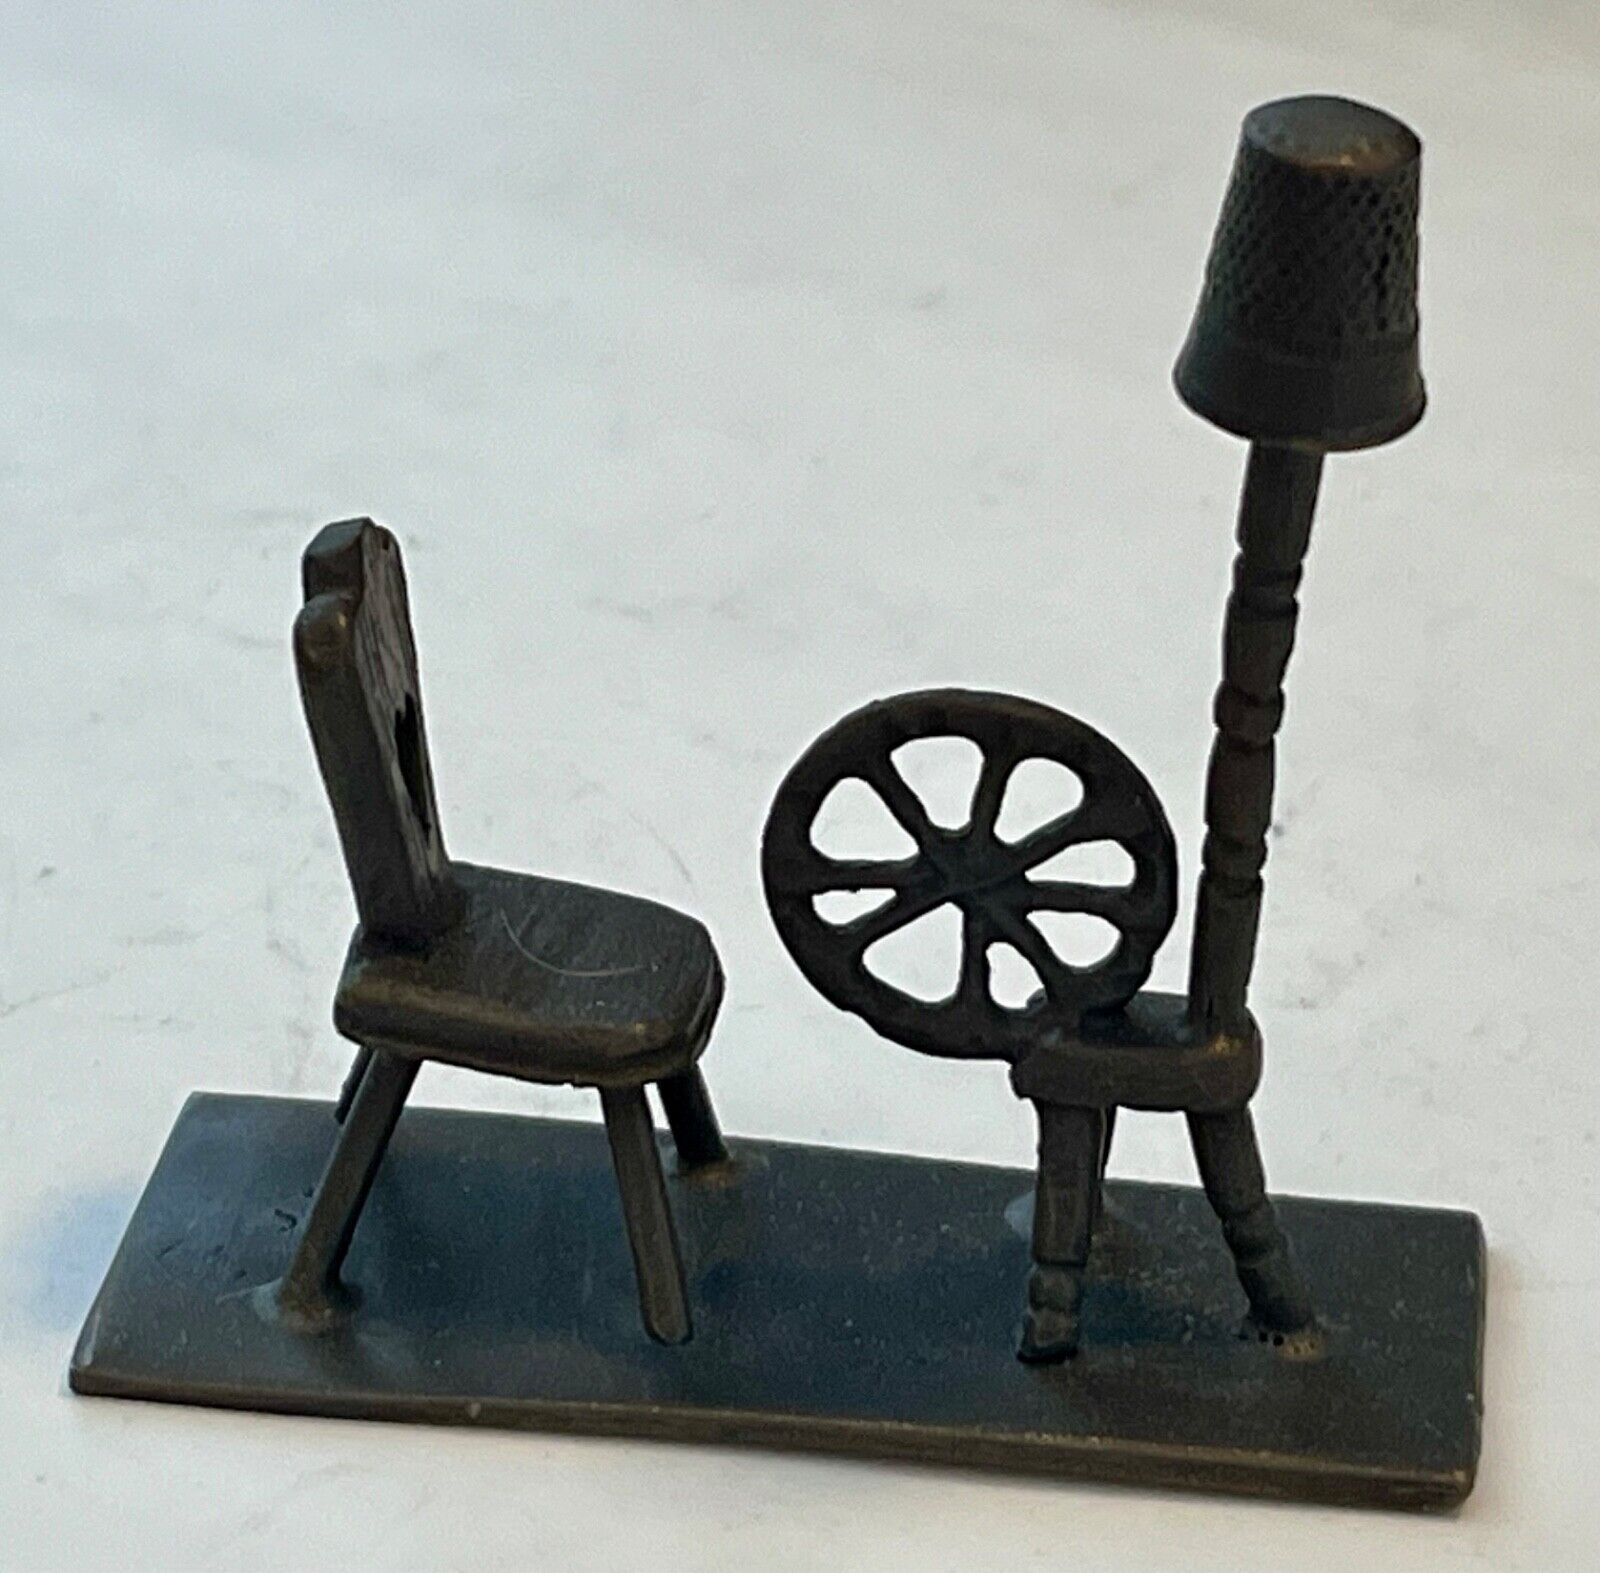 Heirloom Edition Redl Factory Vienna Bronze Chair, Spinning Wheel Thimble Holder